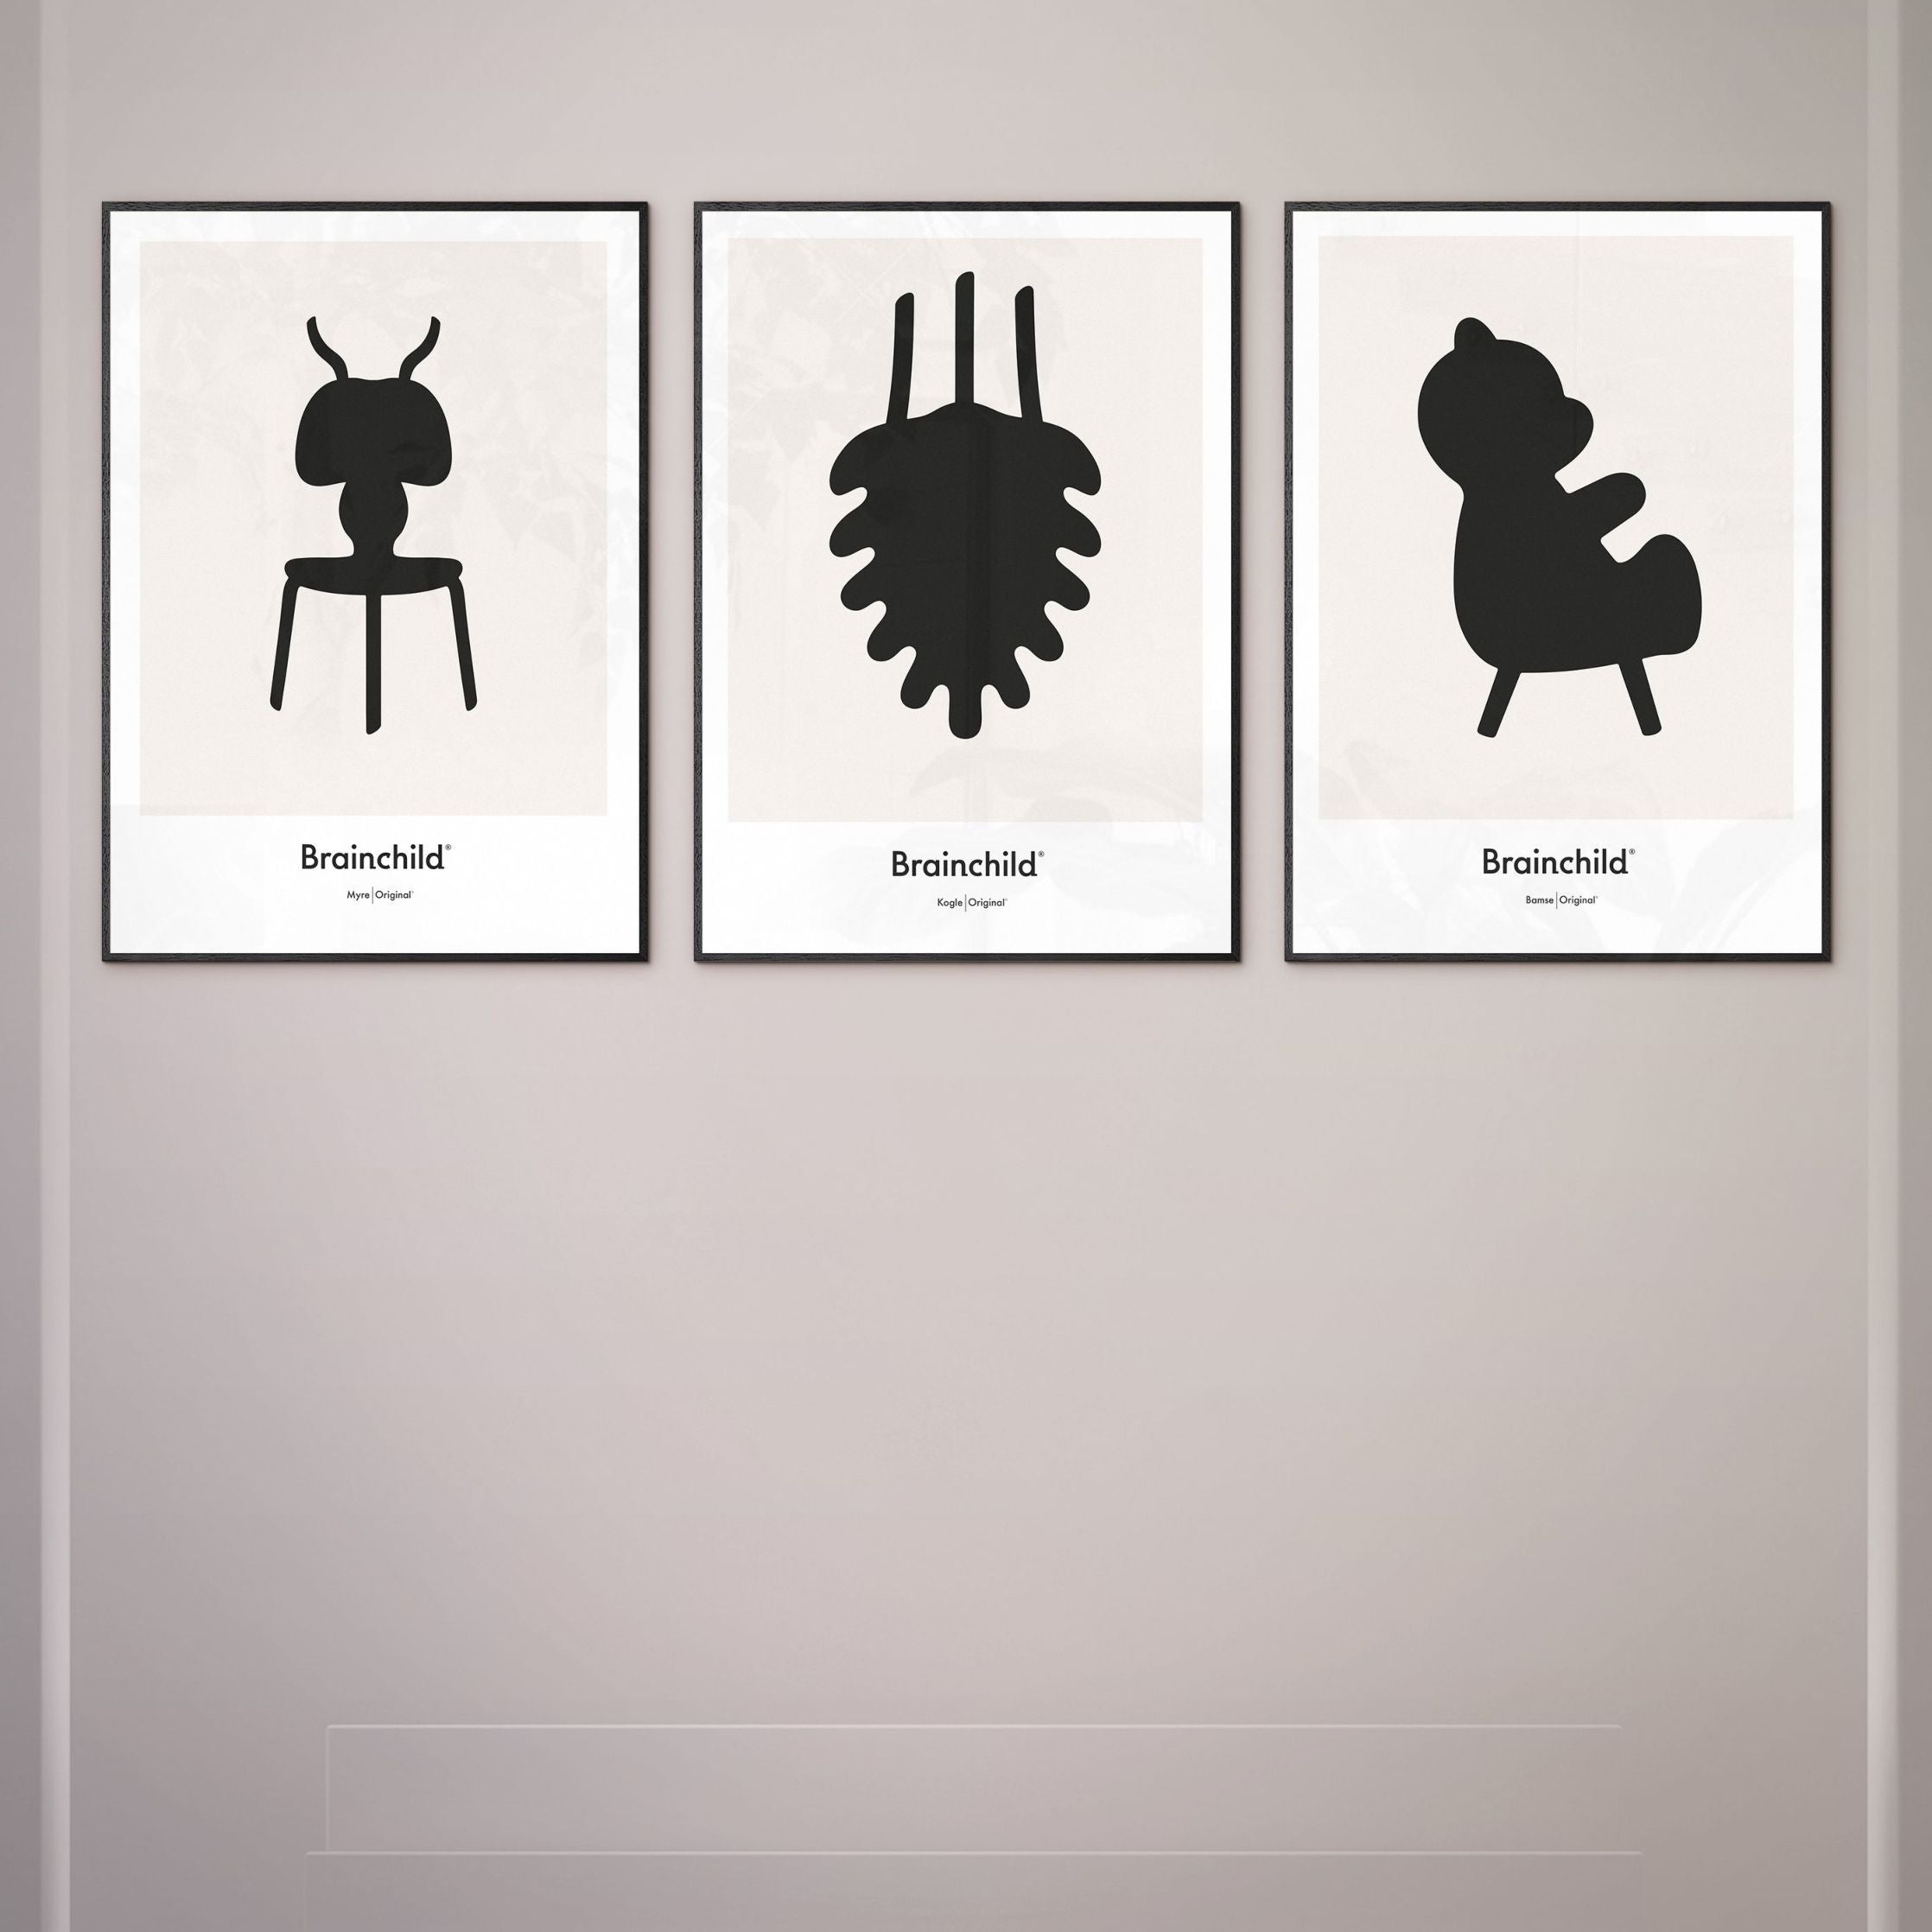 Brainchild Teddybär Design Icon Poster, Rahmen aus schwarz lackiertem Holz 50 X70 cm, grau